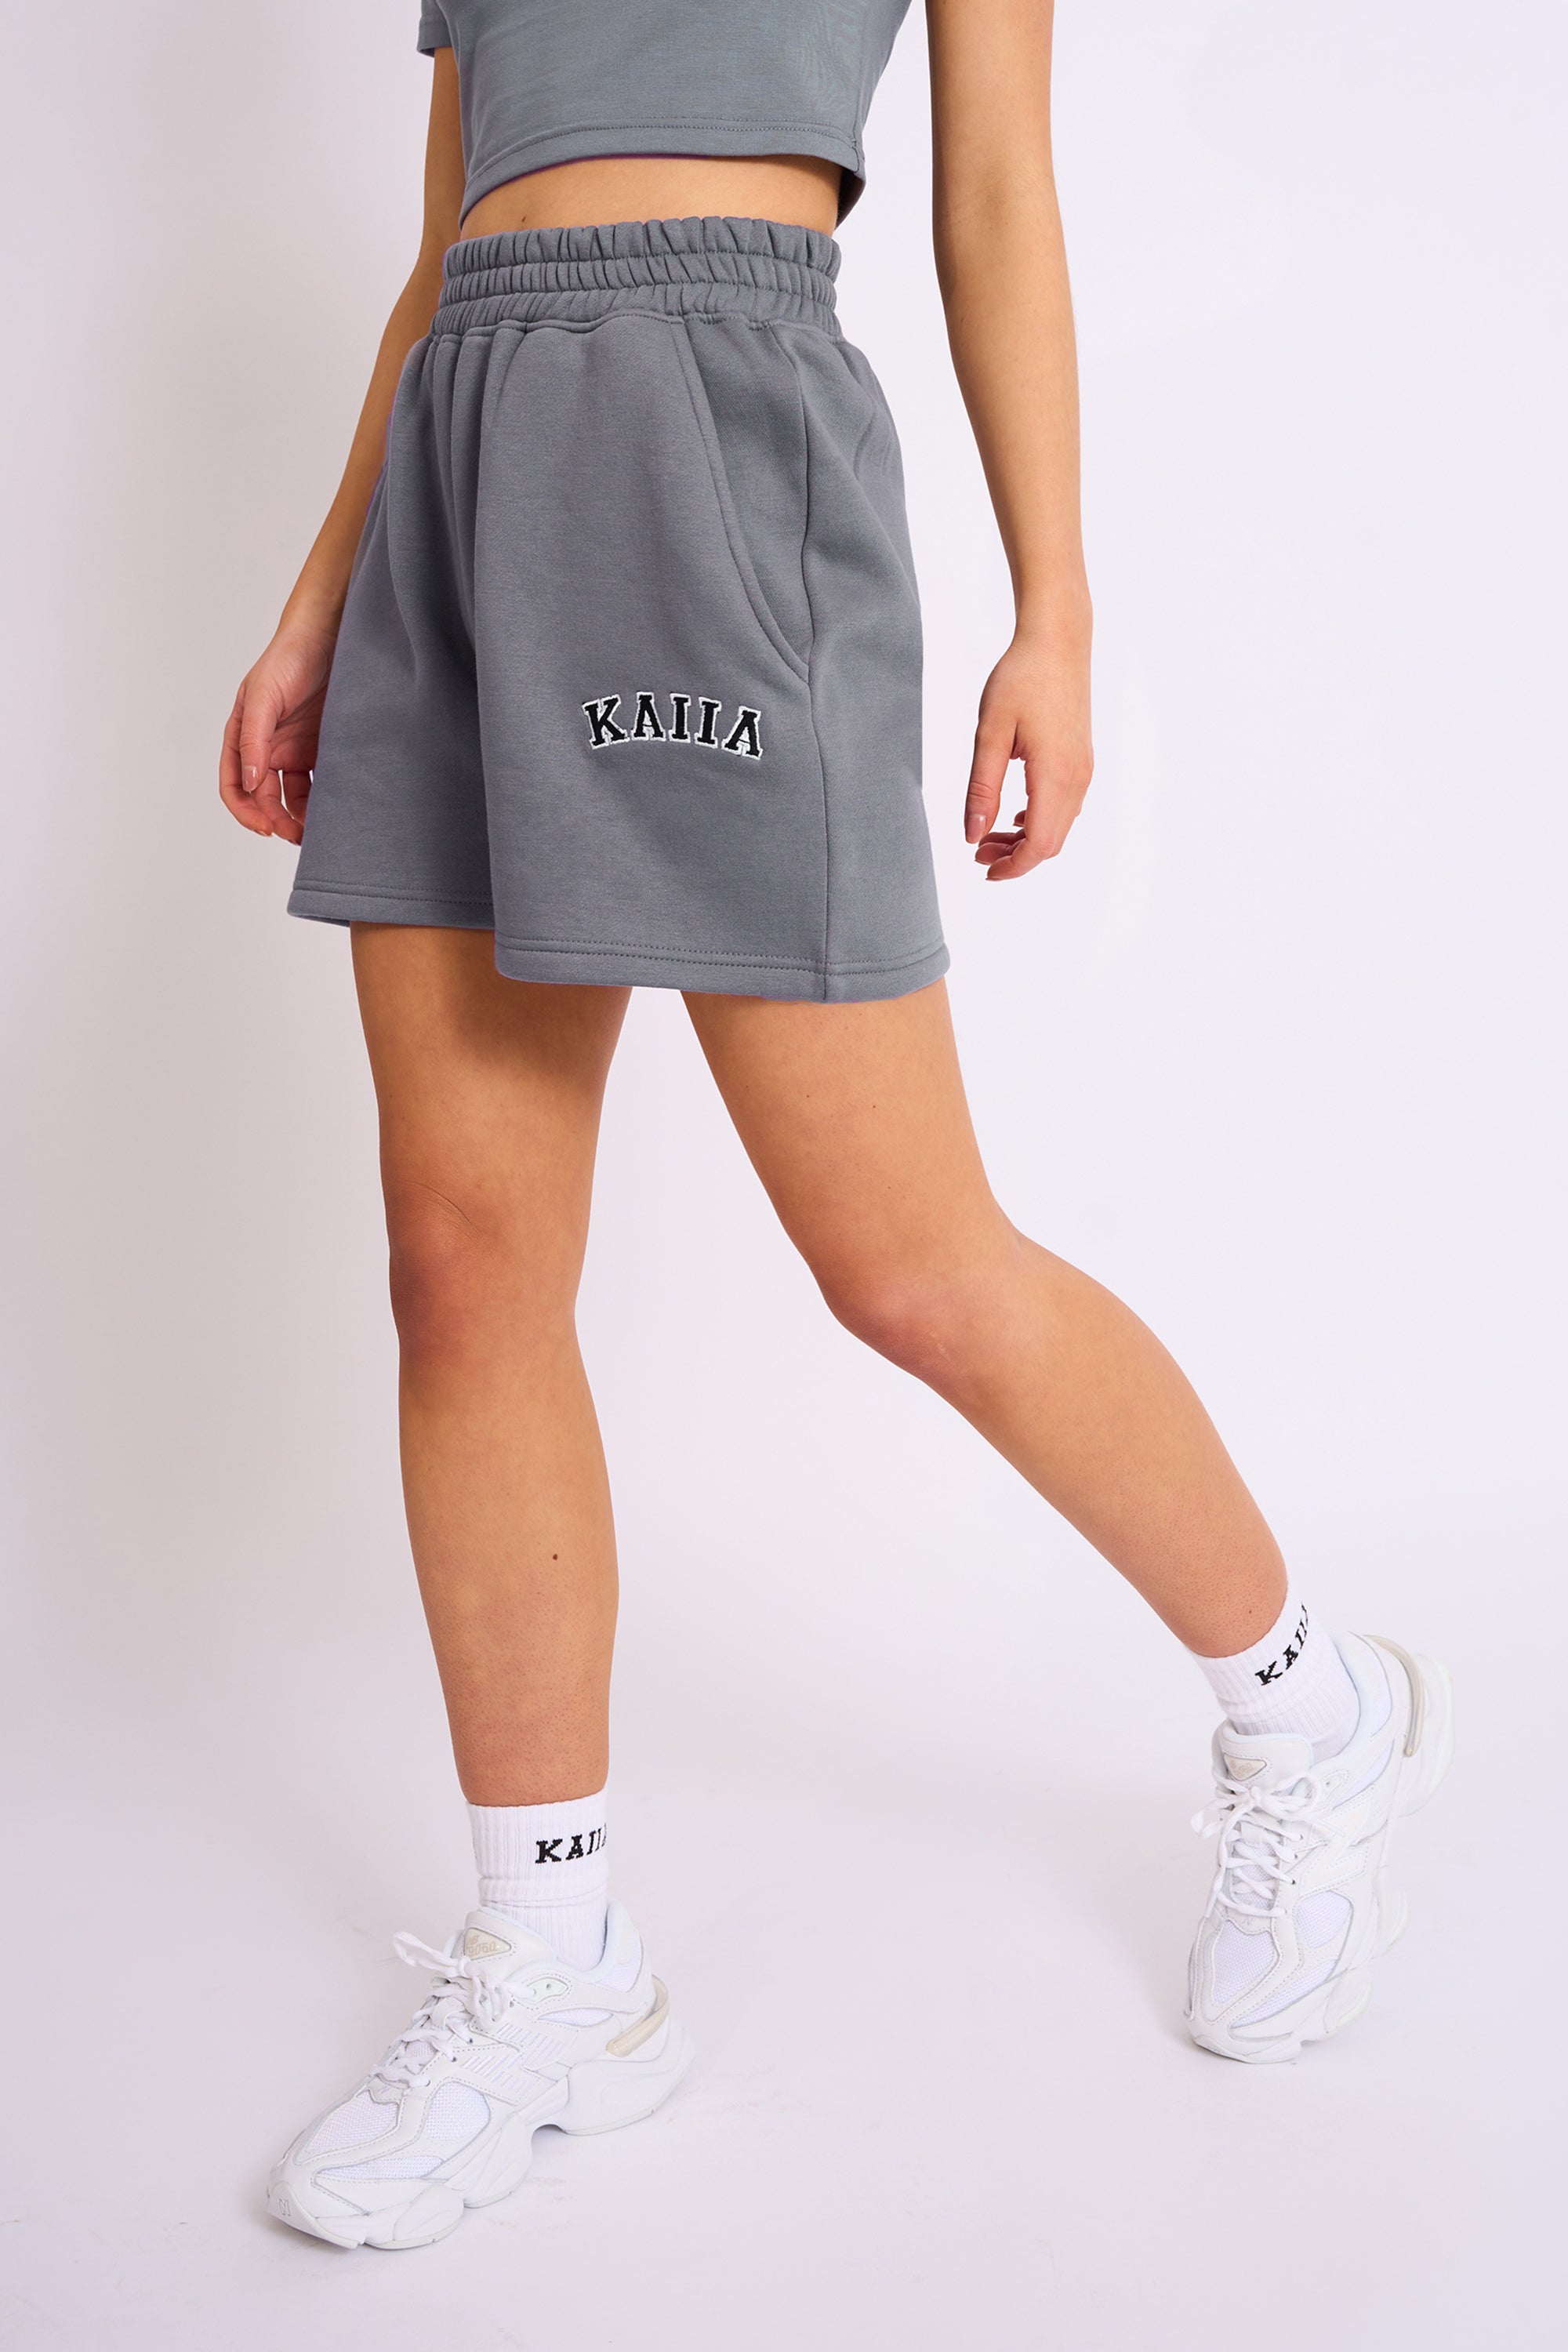 Kaiia Logo Sweat Shorts in Charcoal Grey